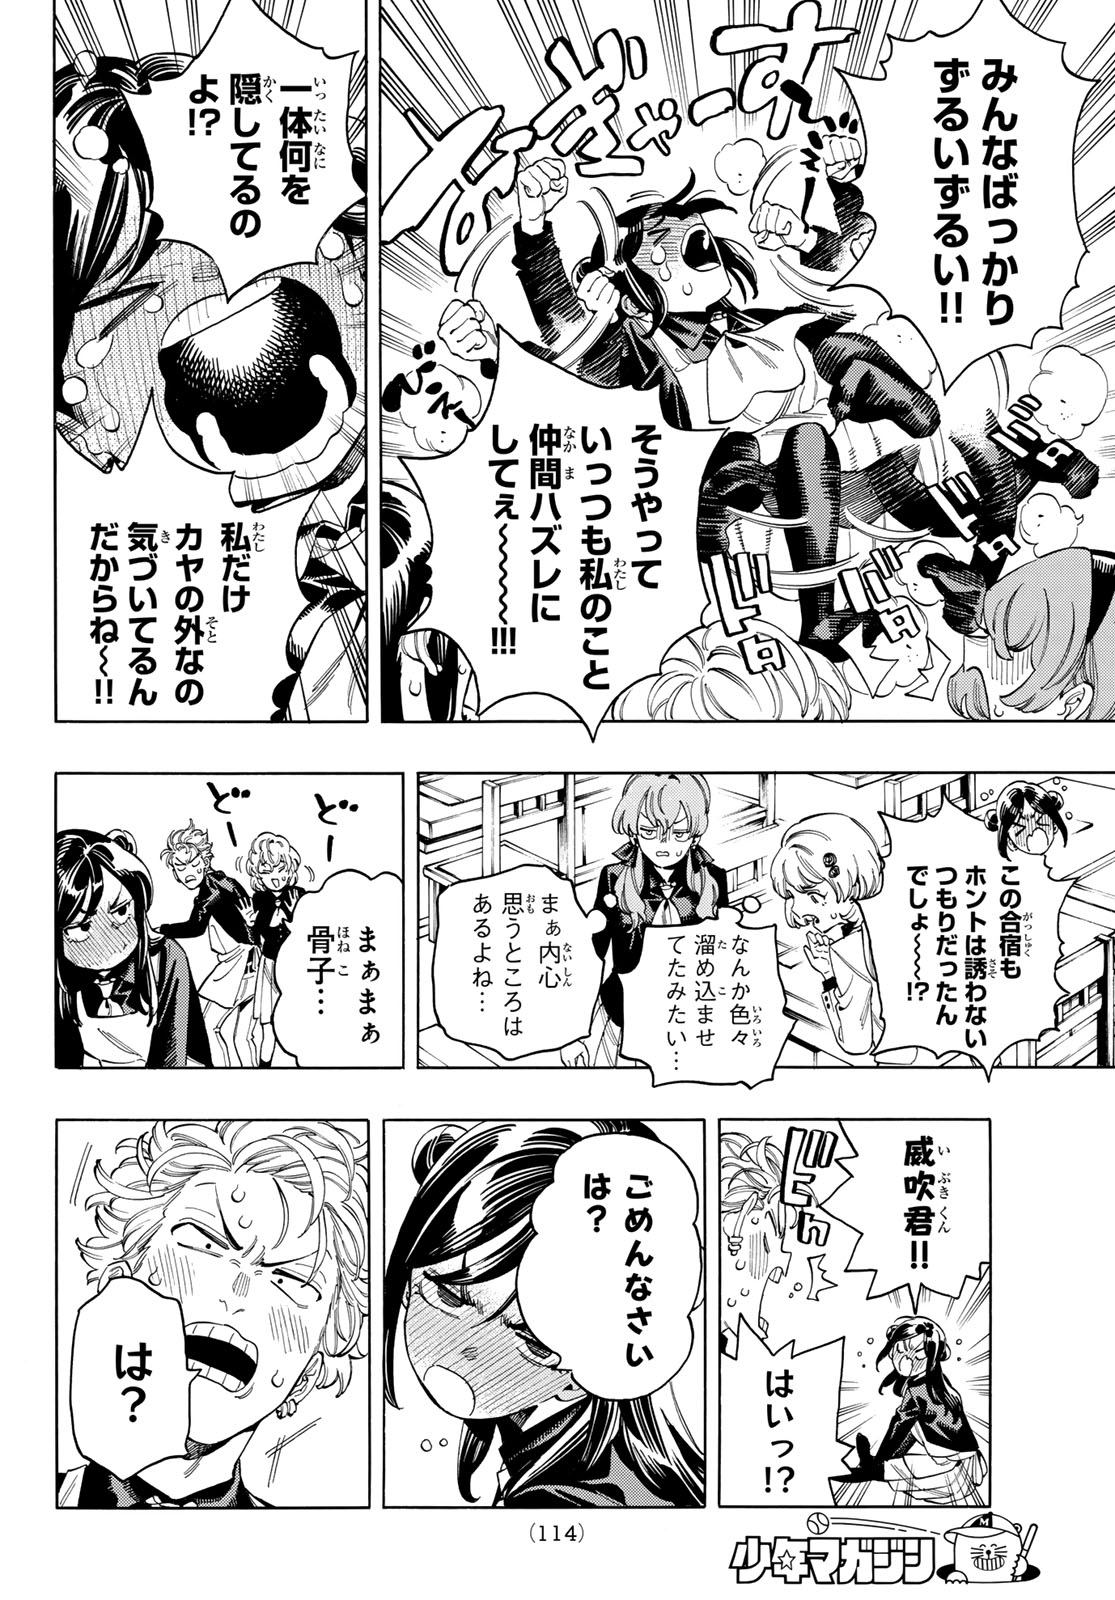 Akabane Honeko no Bodyguard - Chapter 87 - Page 3